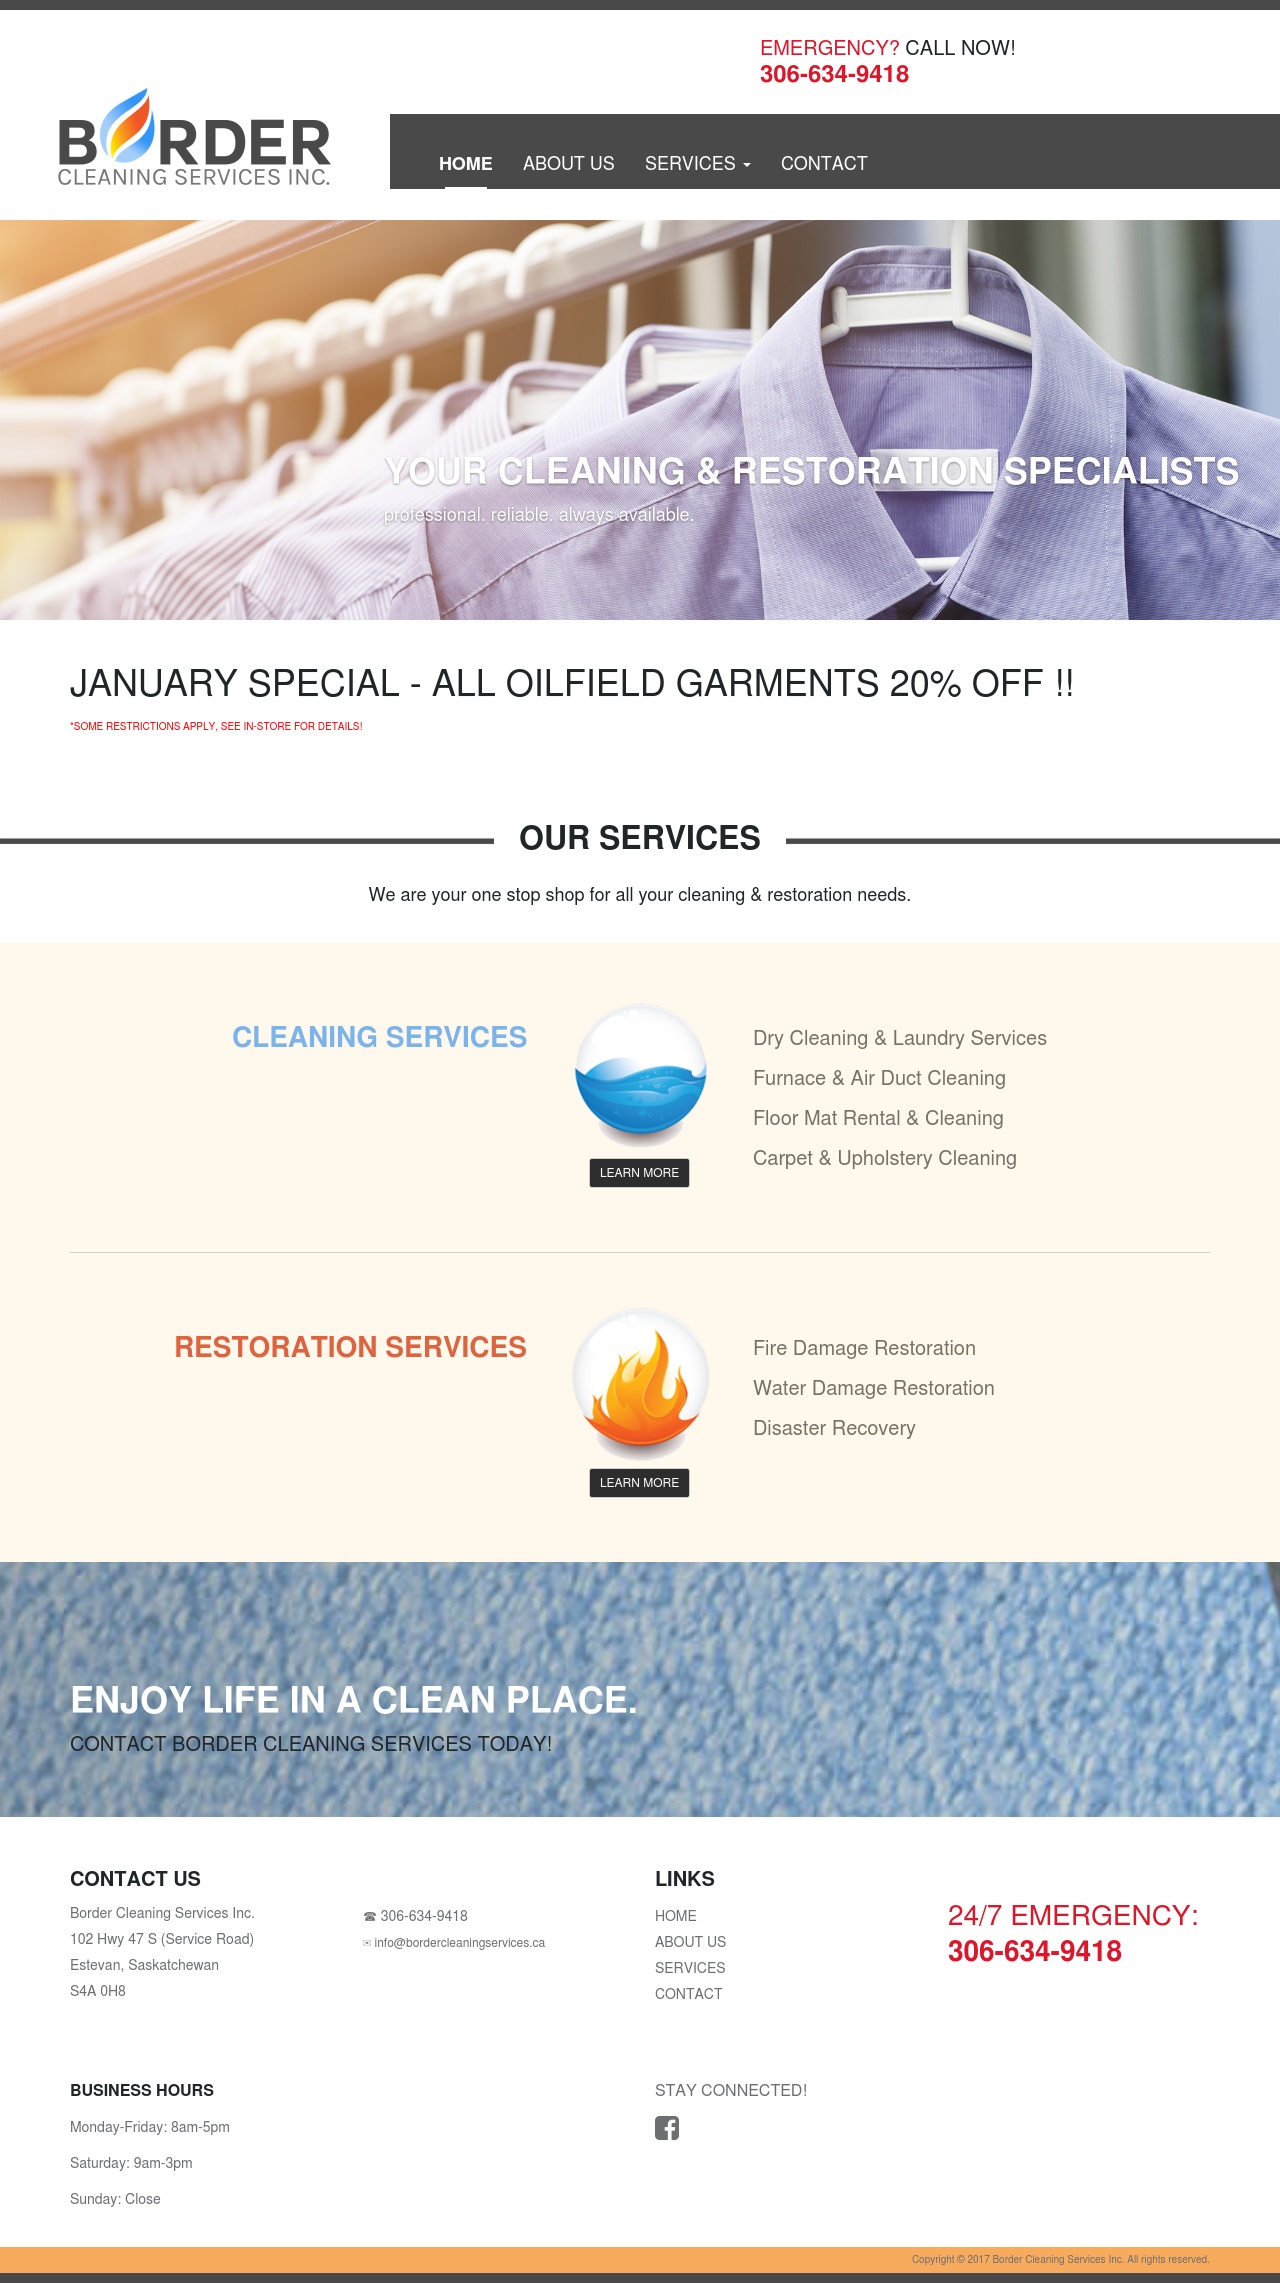 DMS Services Website Portfolio - Border Cleaning Services Inc.